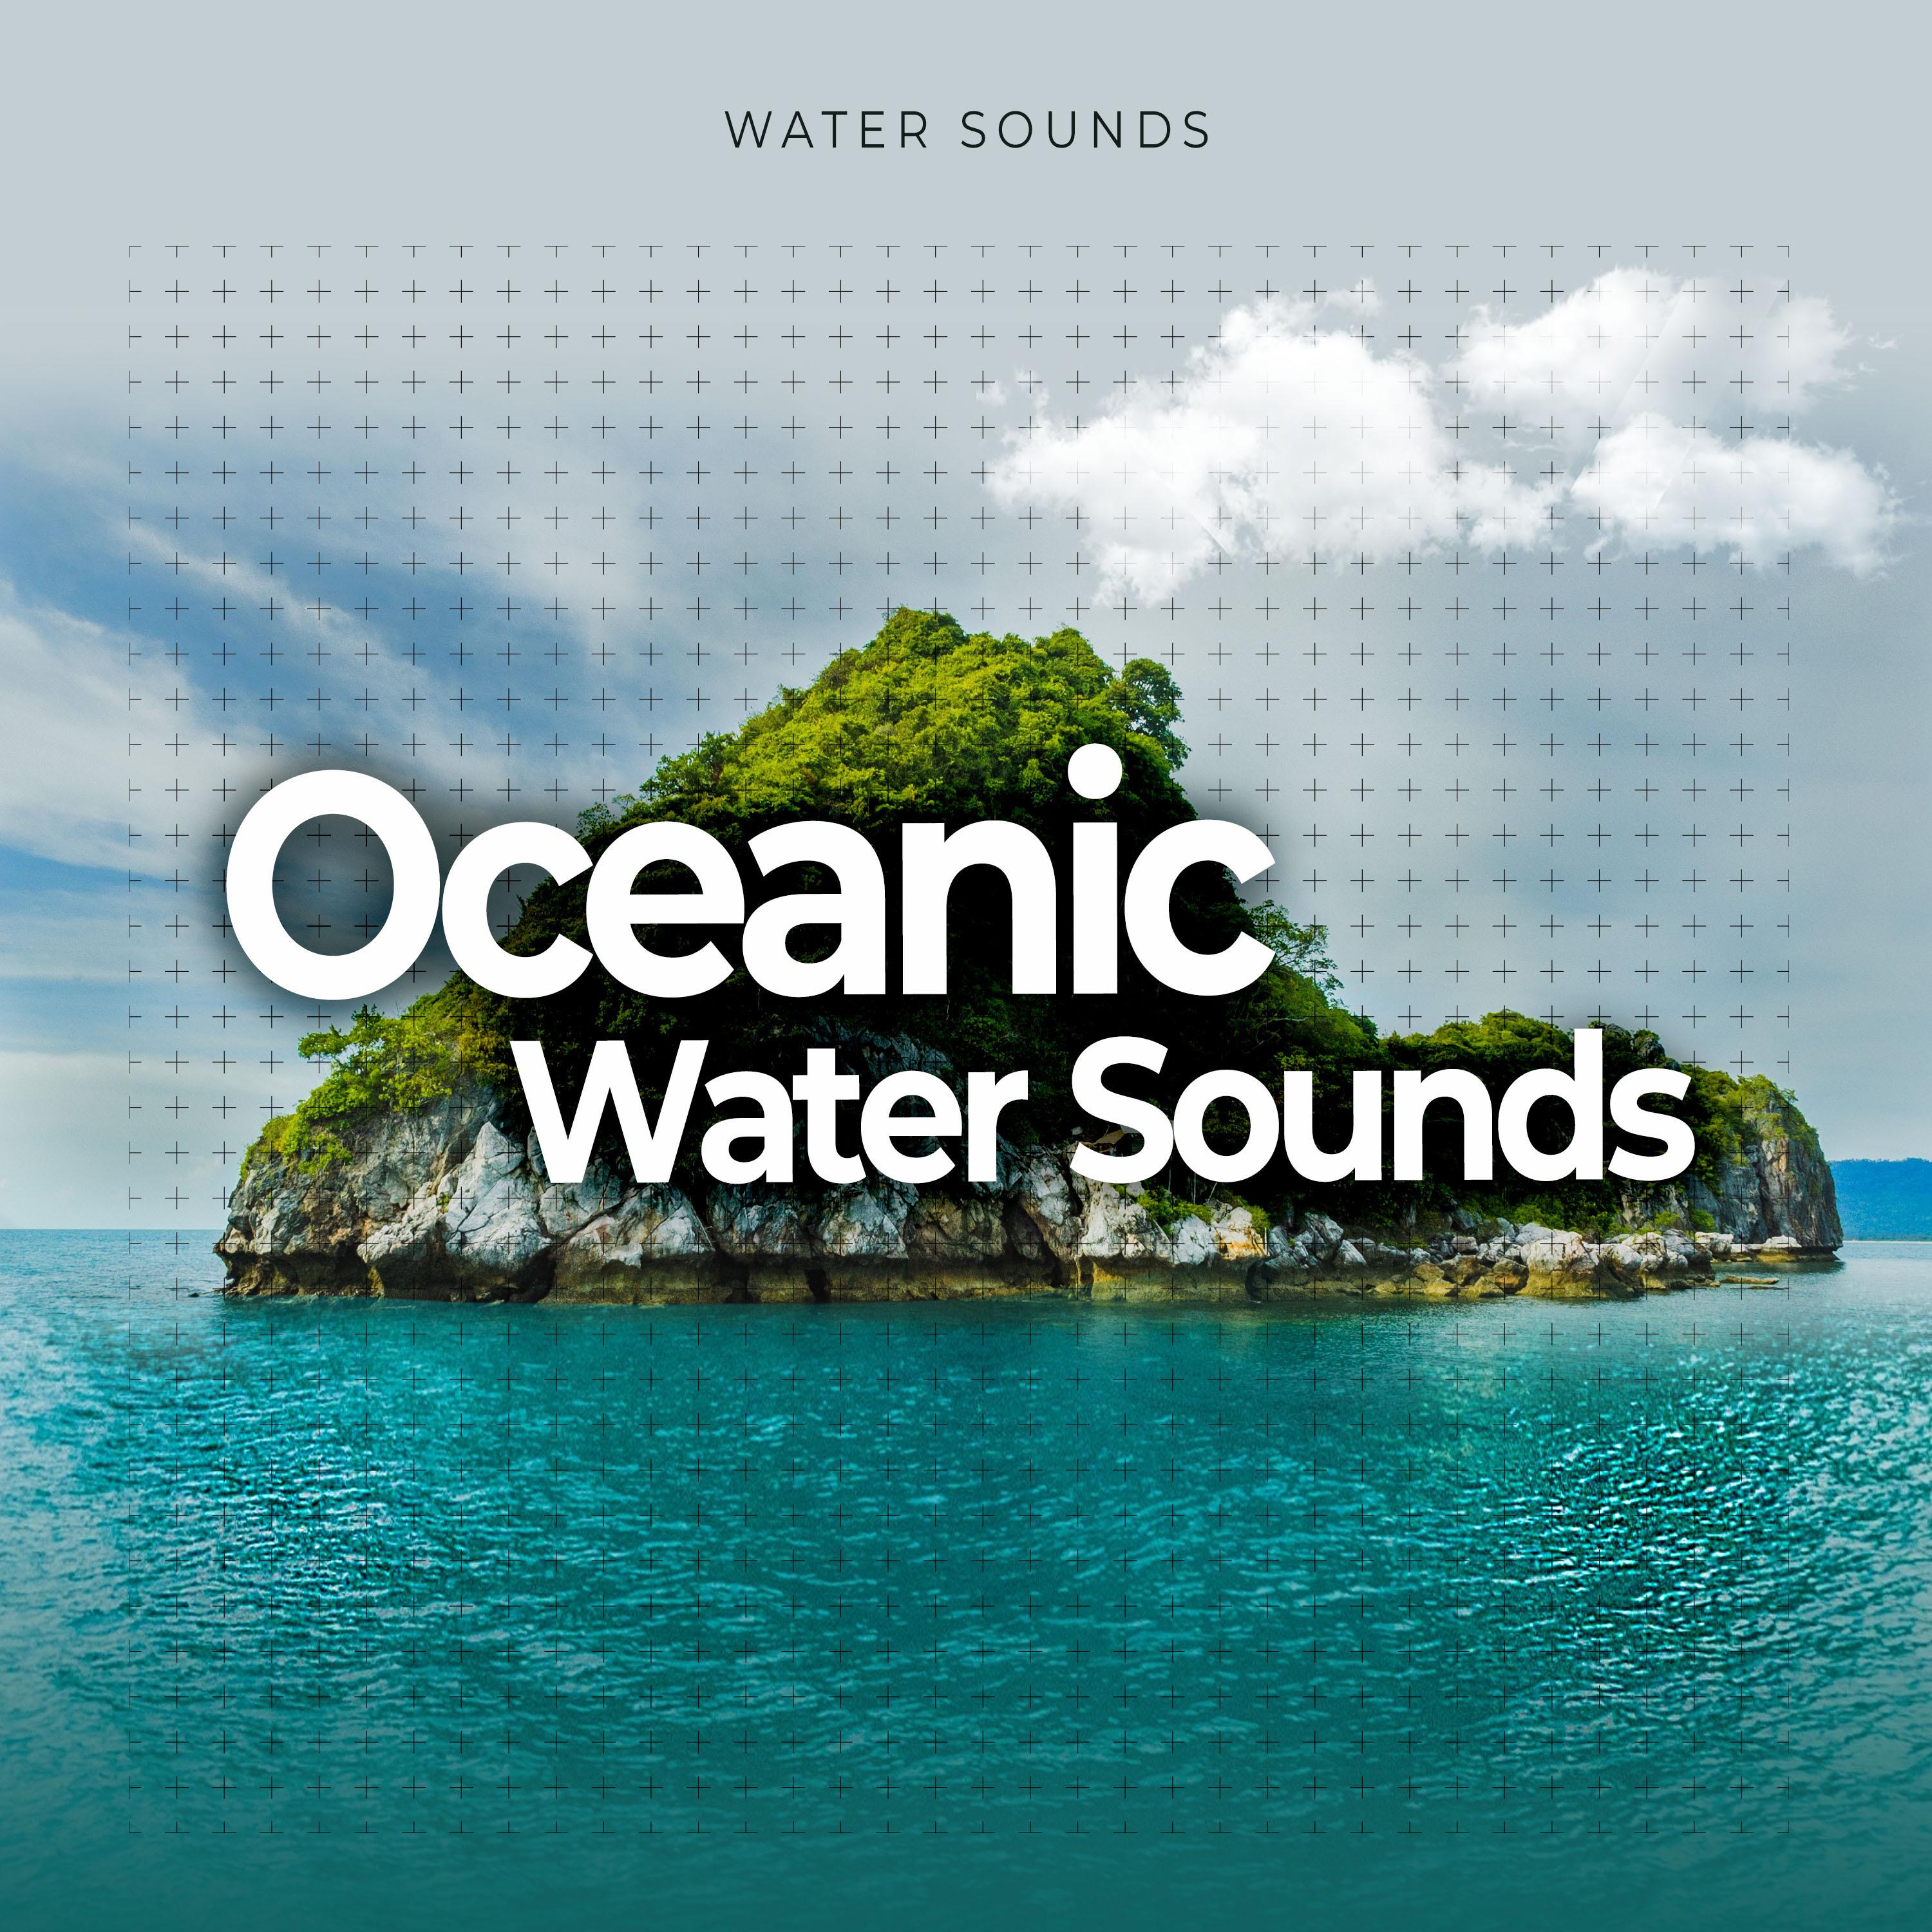 Oceanic Water Sounds